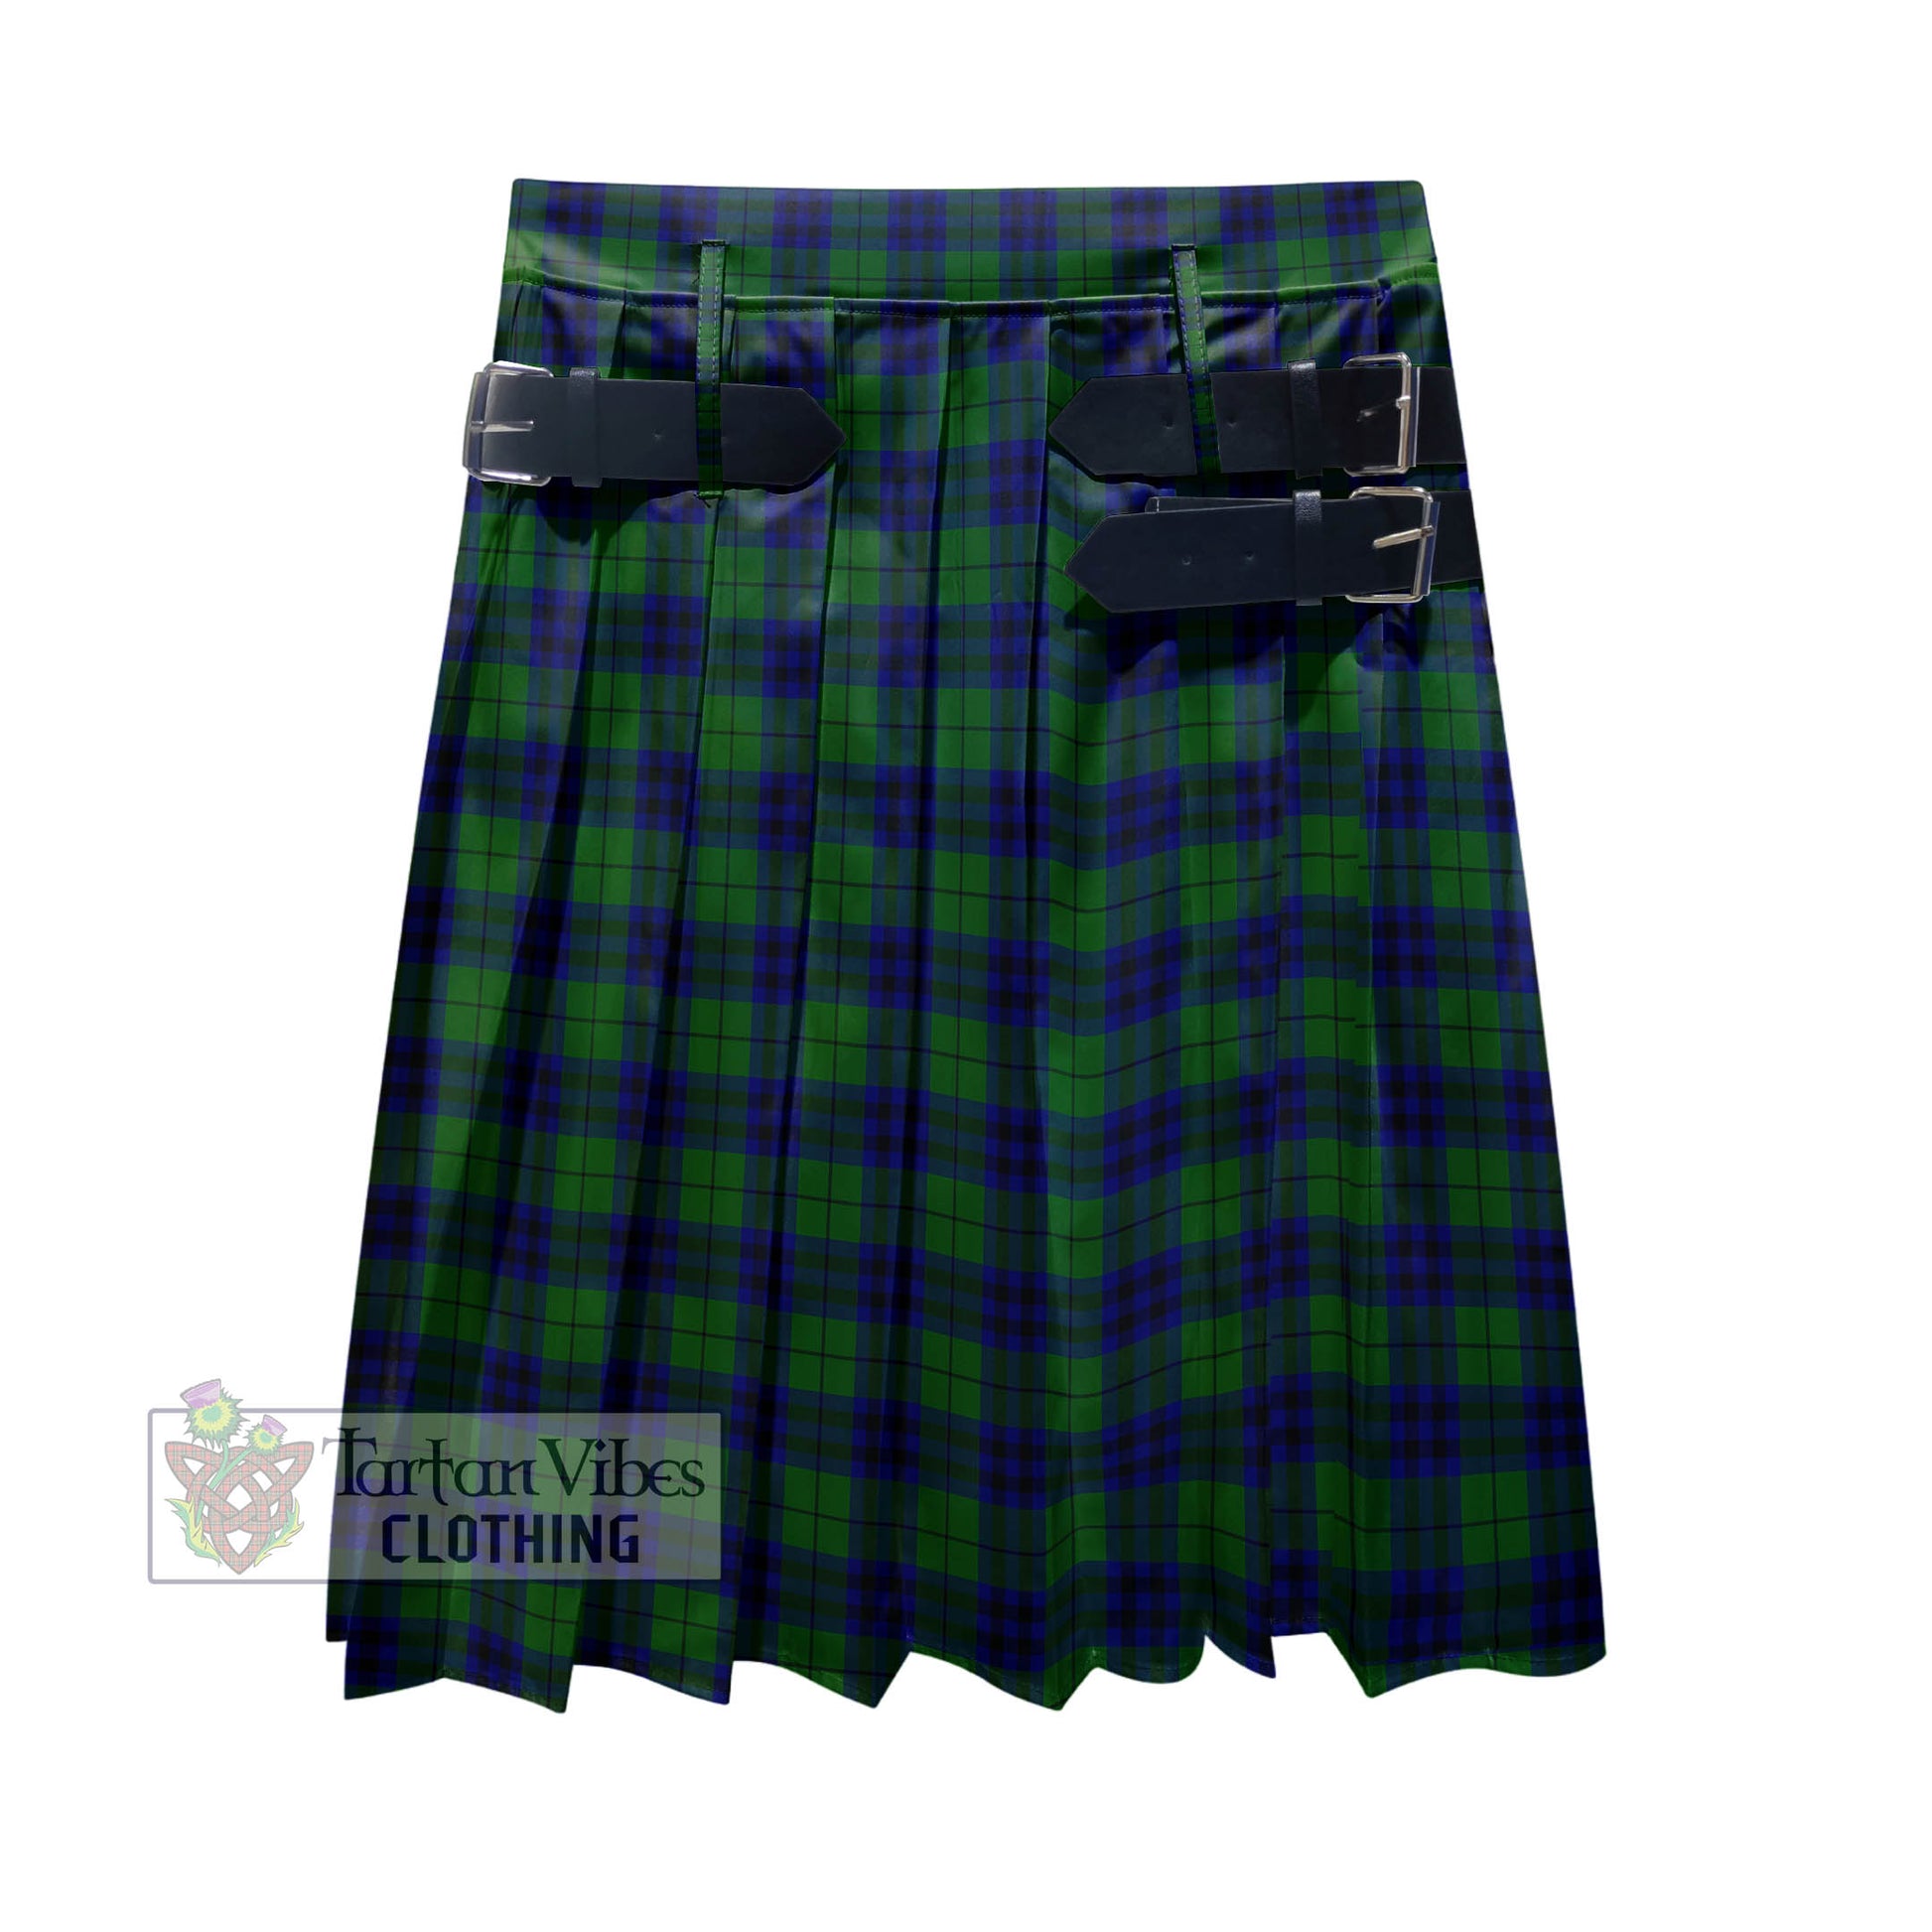 Tartan Vibes Clothing Keith Modern Tartan Men's Pleated Skirt - Fashion Casual Retro Scottish Style